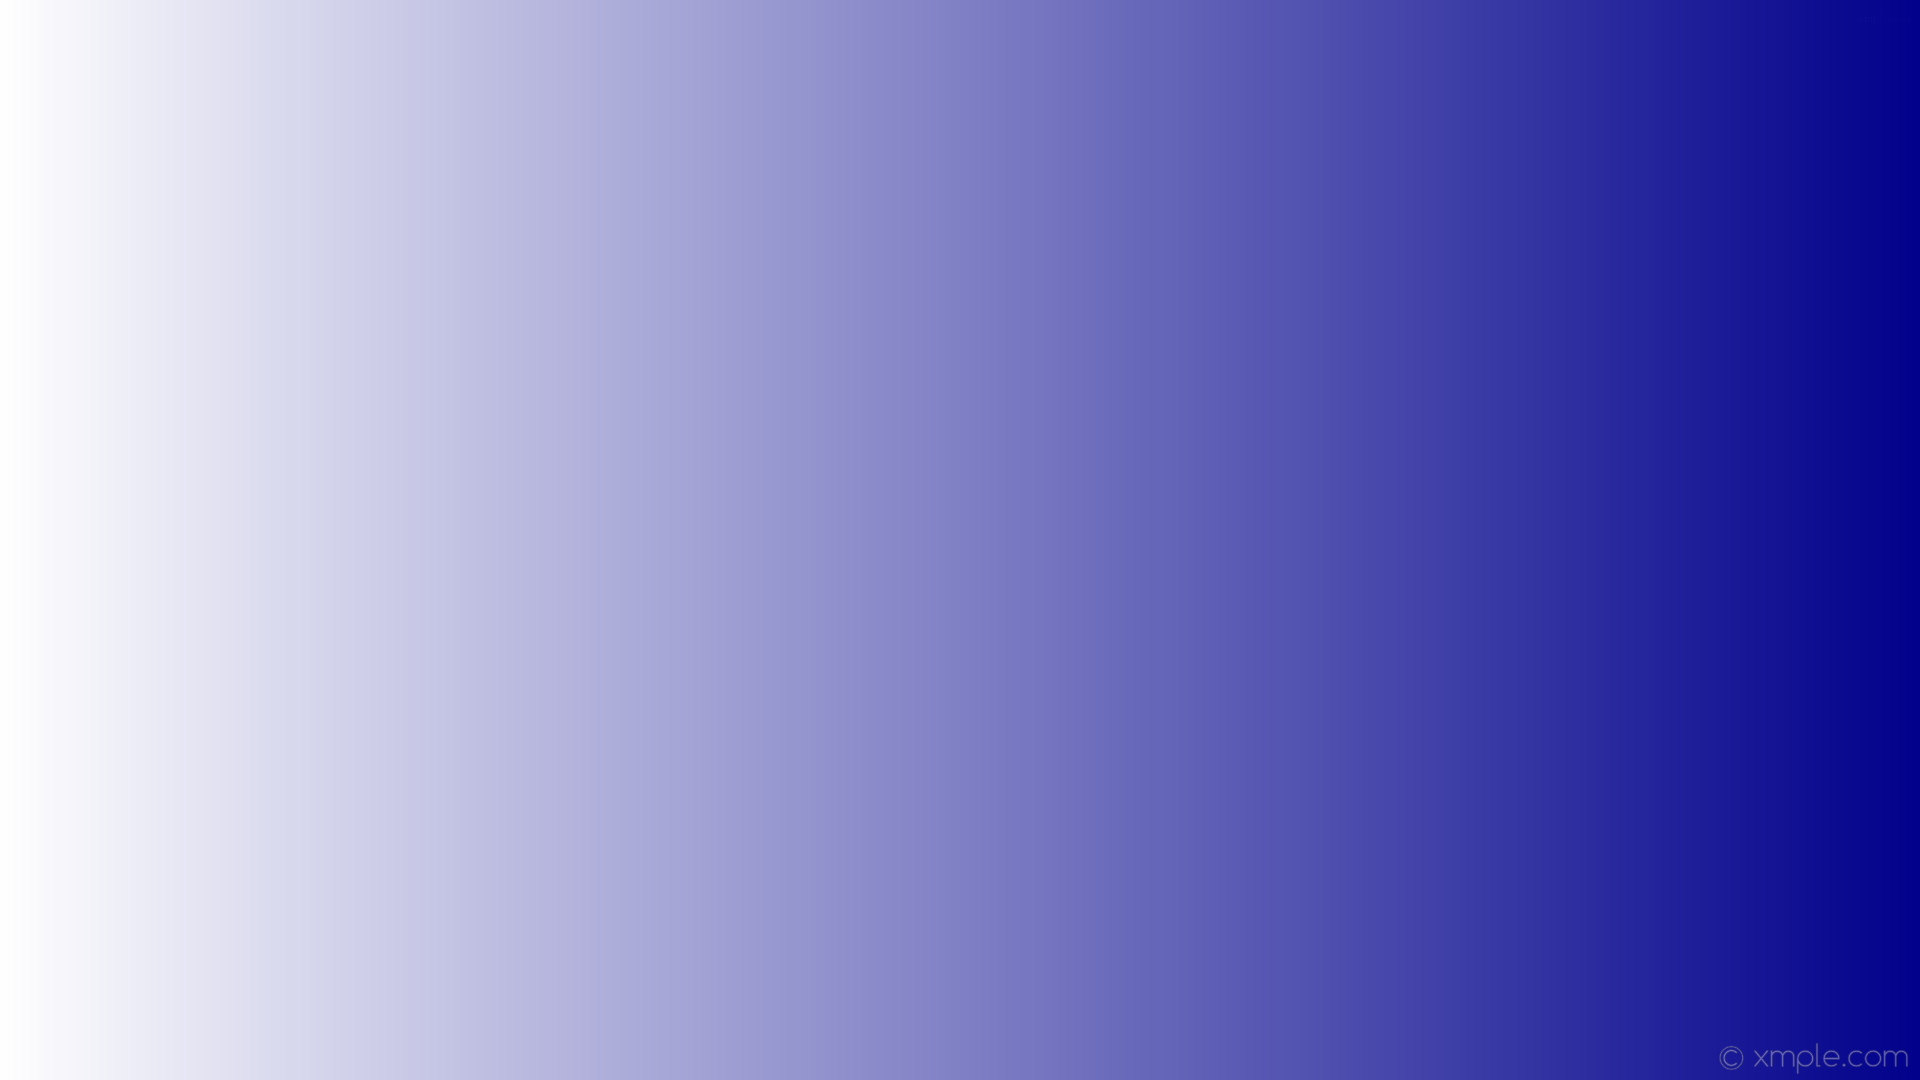 1920x1080 wallpaper blue white gradient linear dark blue #00008b #ffffff 0Â°